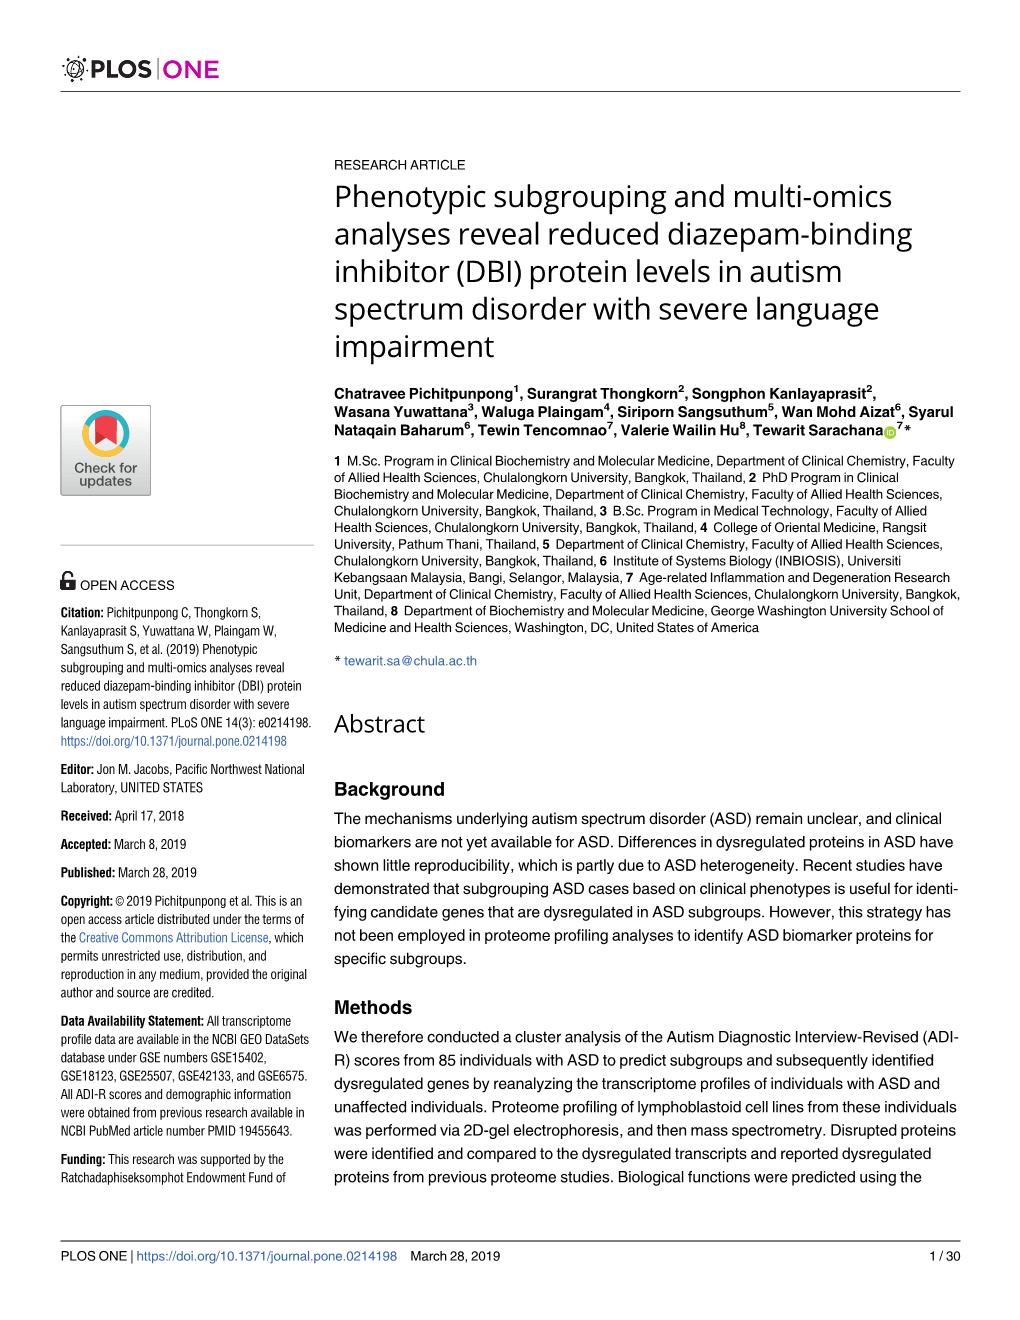 Phenotypic Subgrouping and Multi-Omics Analyses Reveal